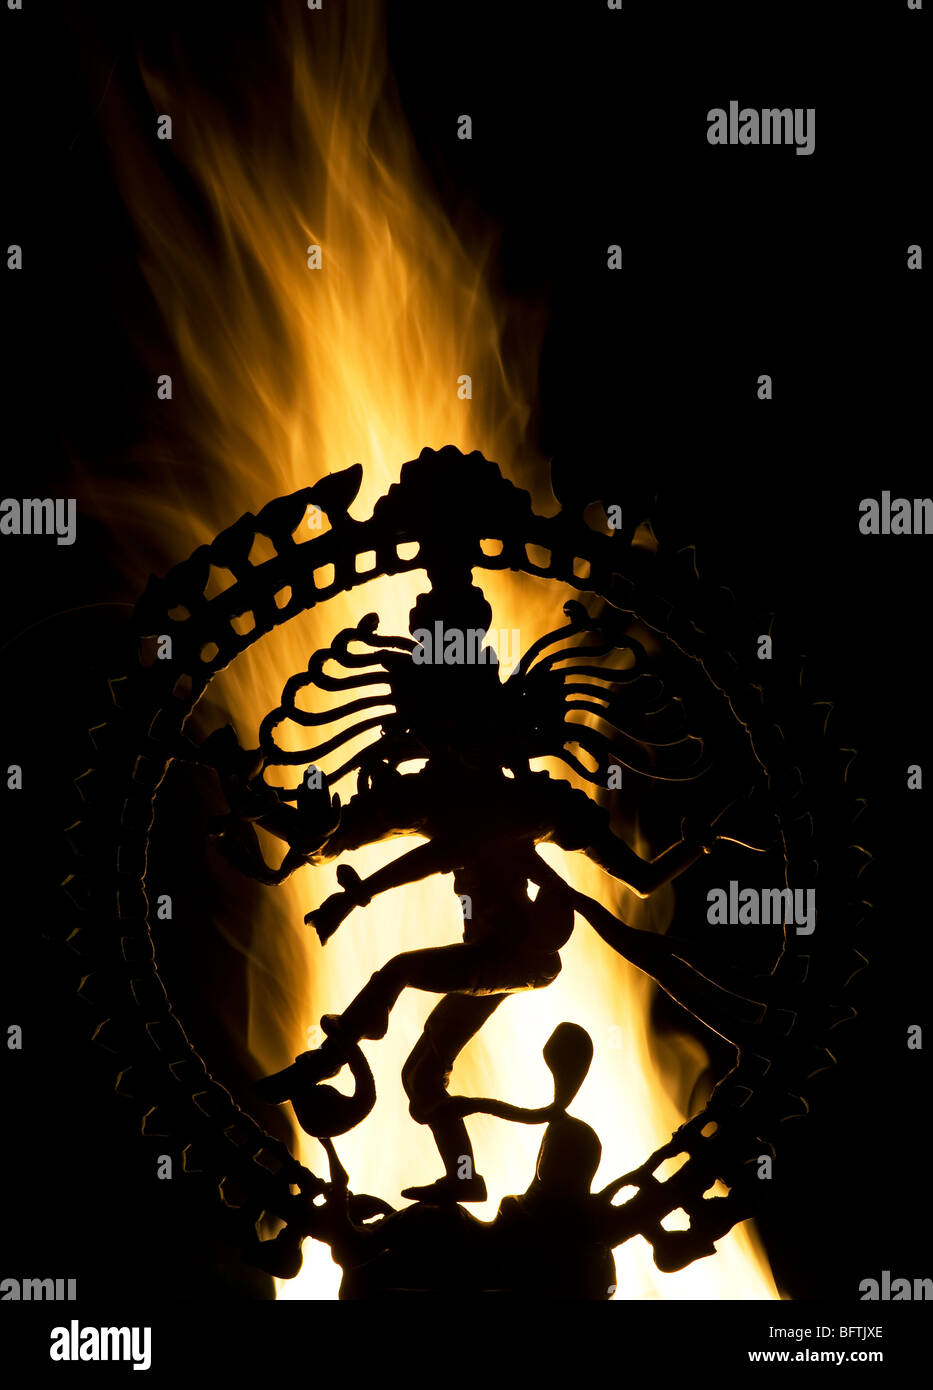 Lord Shiva Statue, Nataraja, vor Feuer tanzen. Silhouette Stockfoto